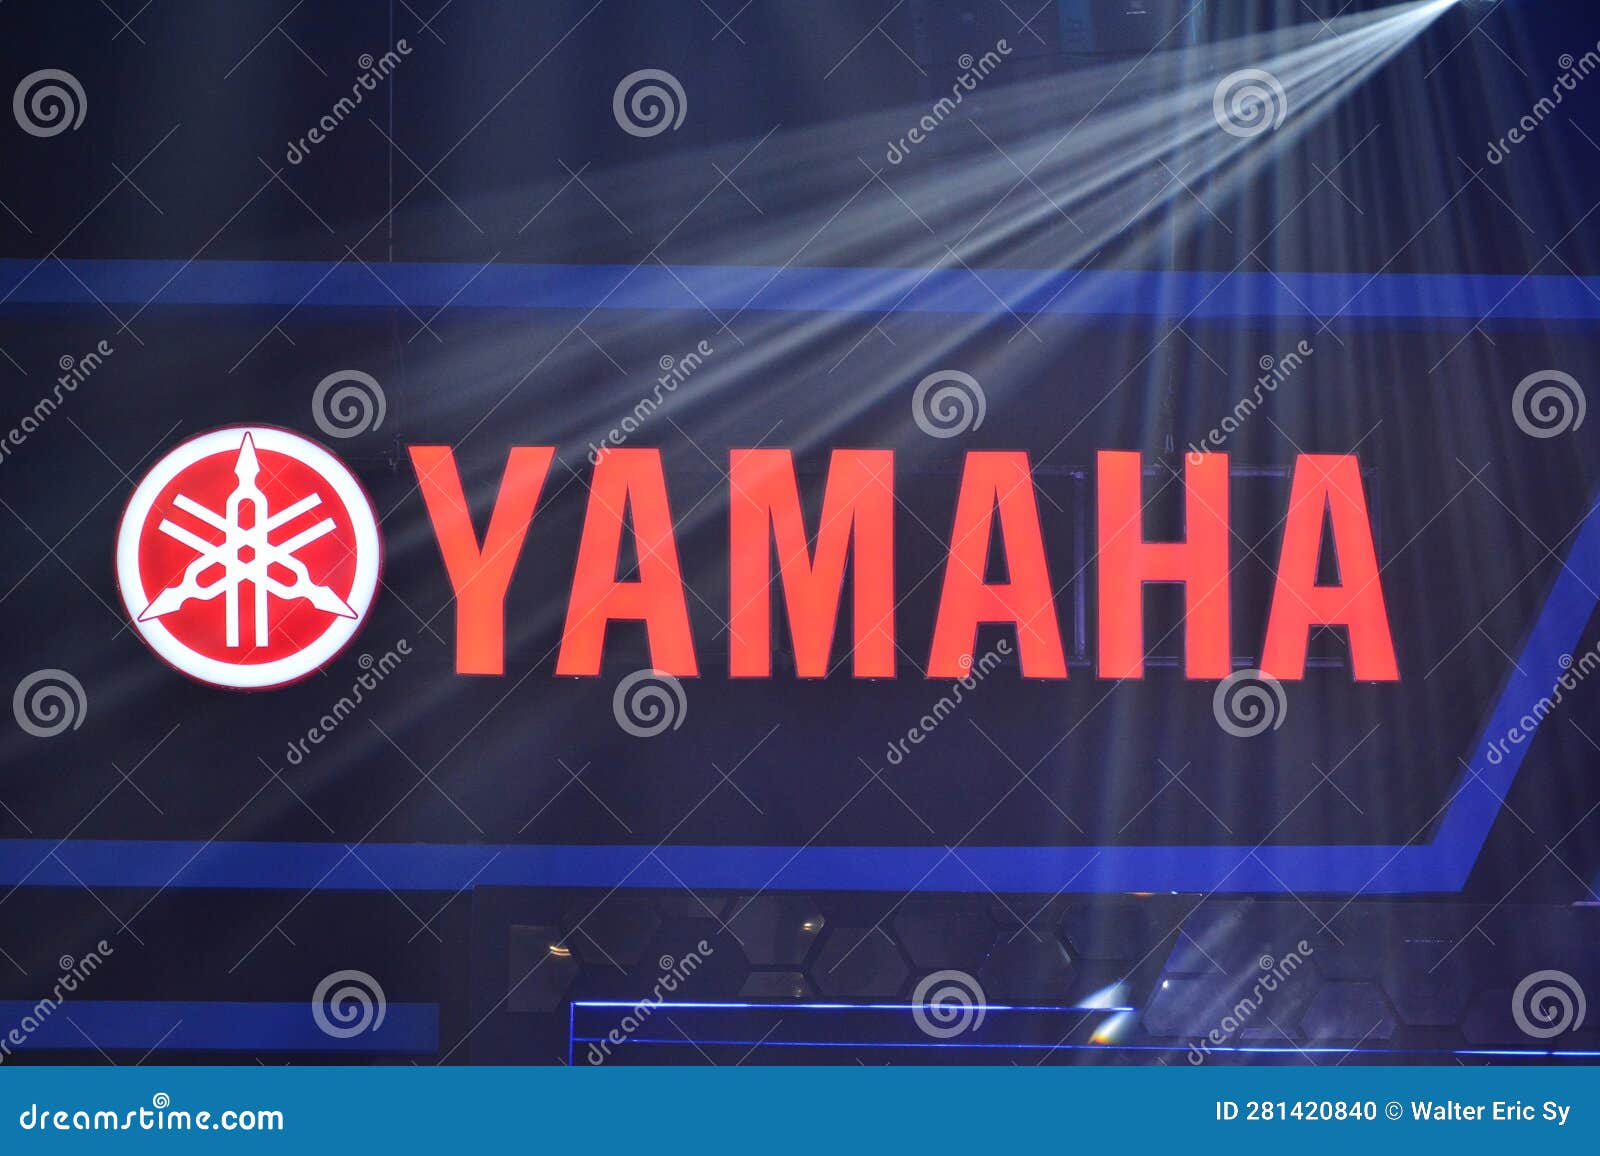 Yamaha Logo Wallpaper (61+ images)